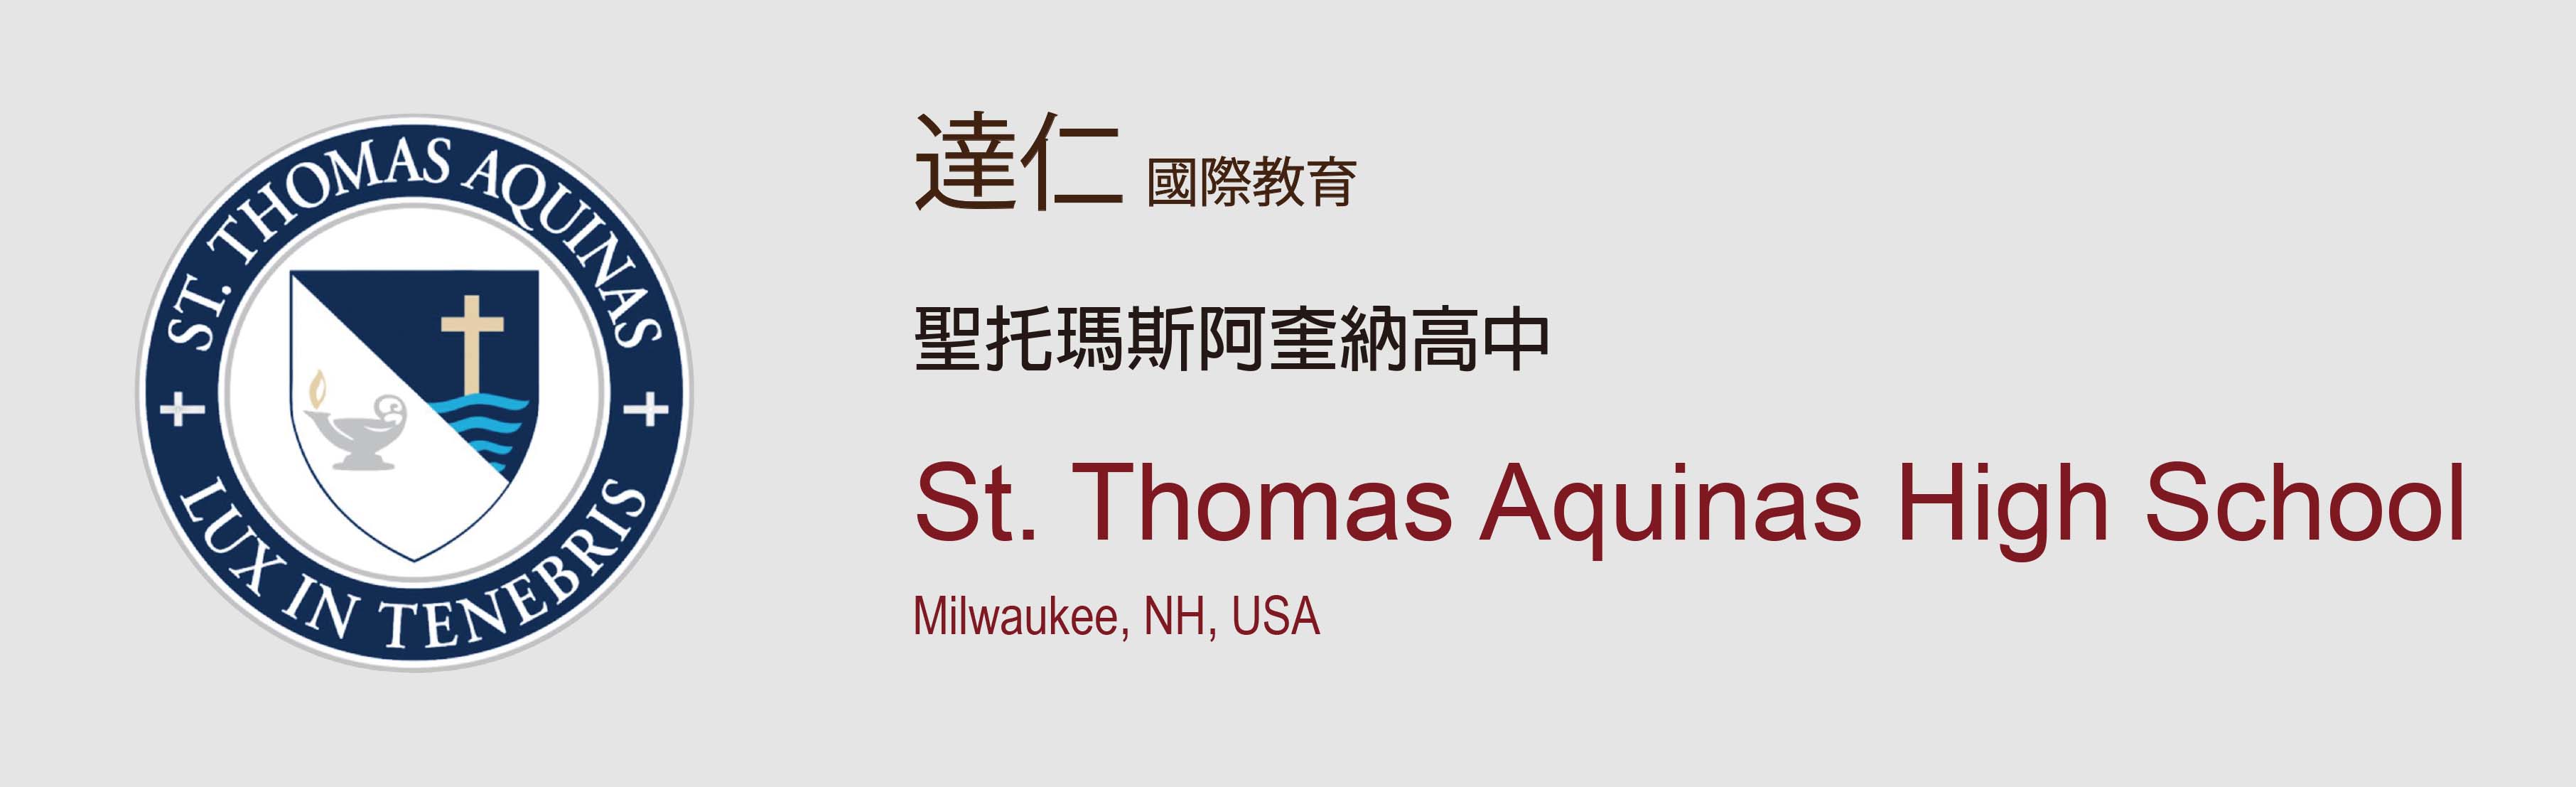 聖托瑪斯阿奎納高中 St Thomas Aquinas High School